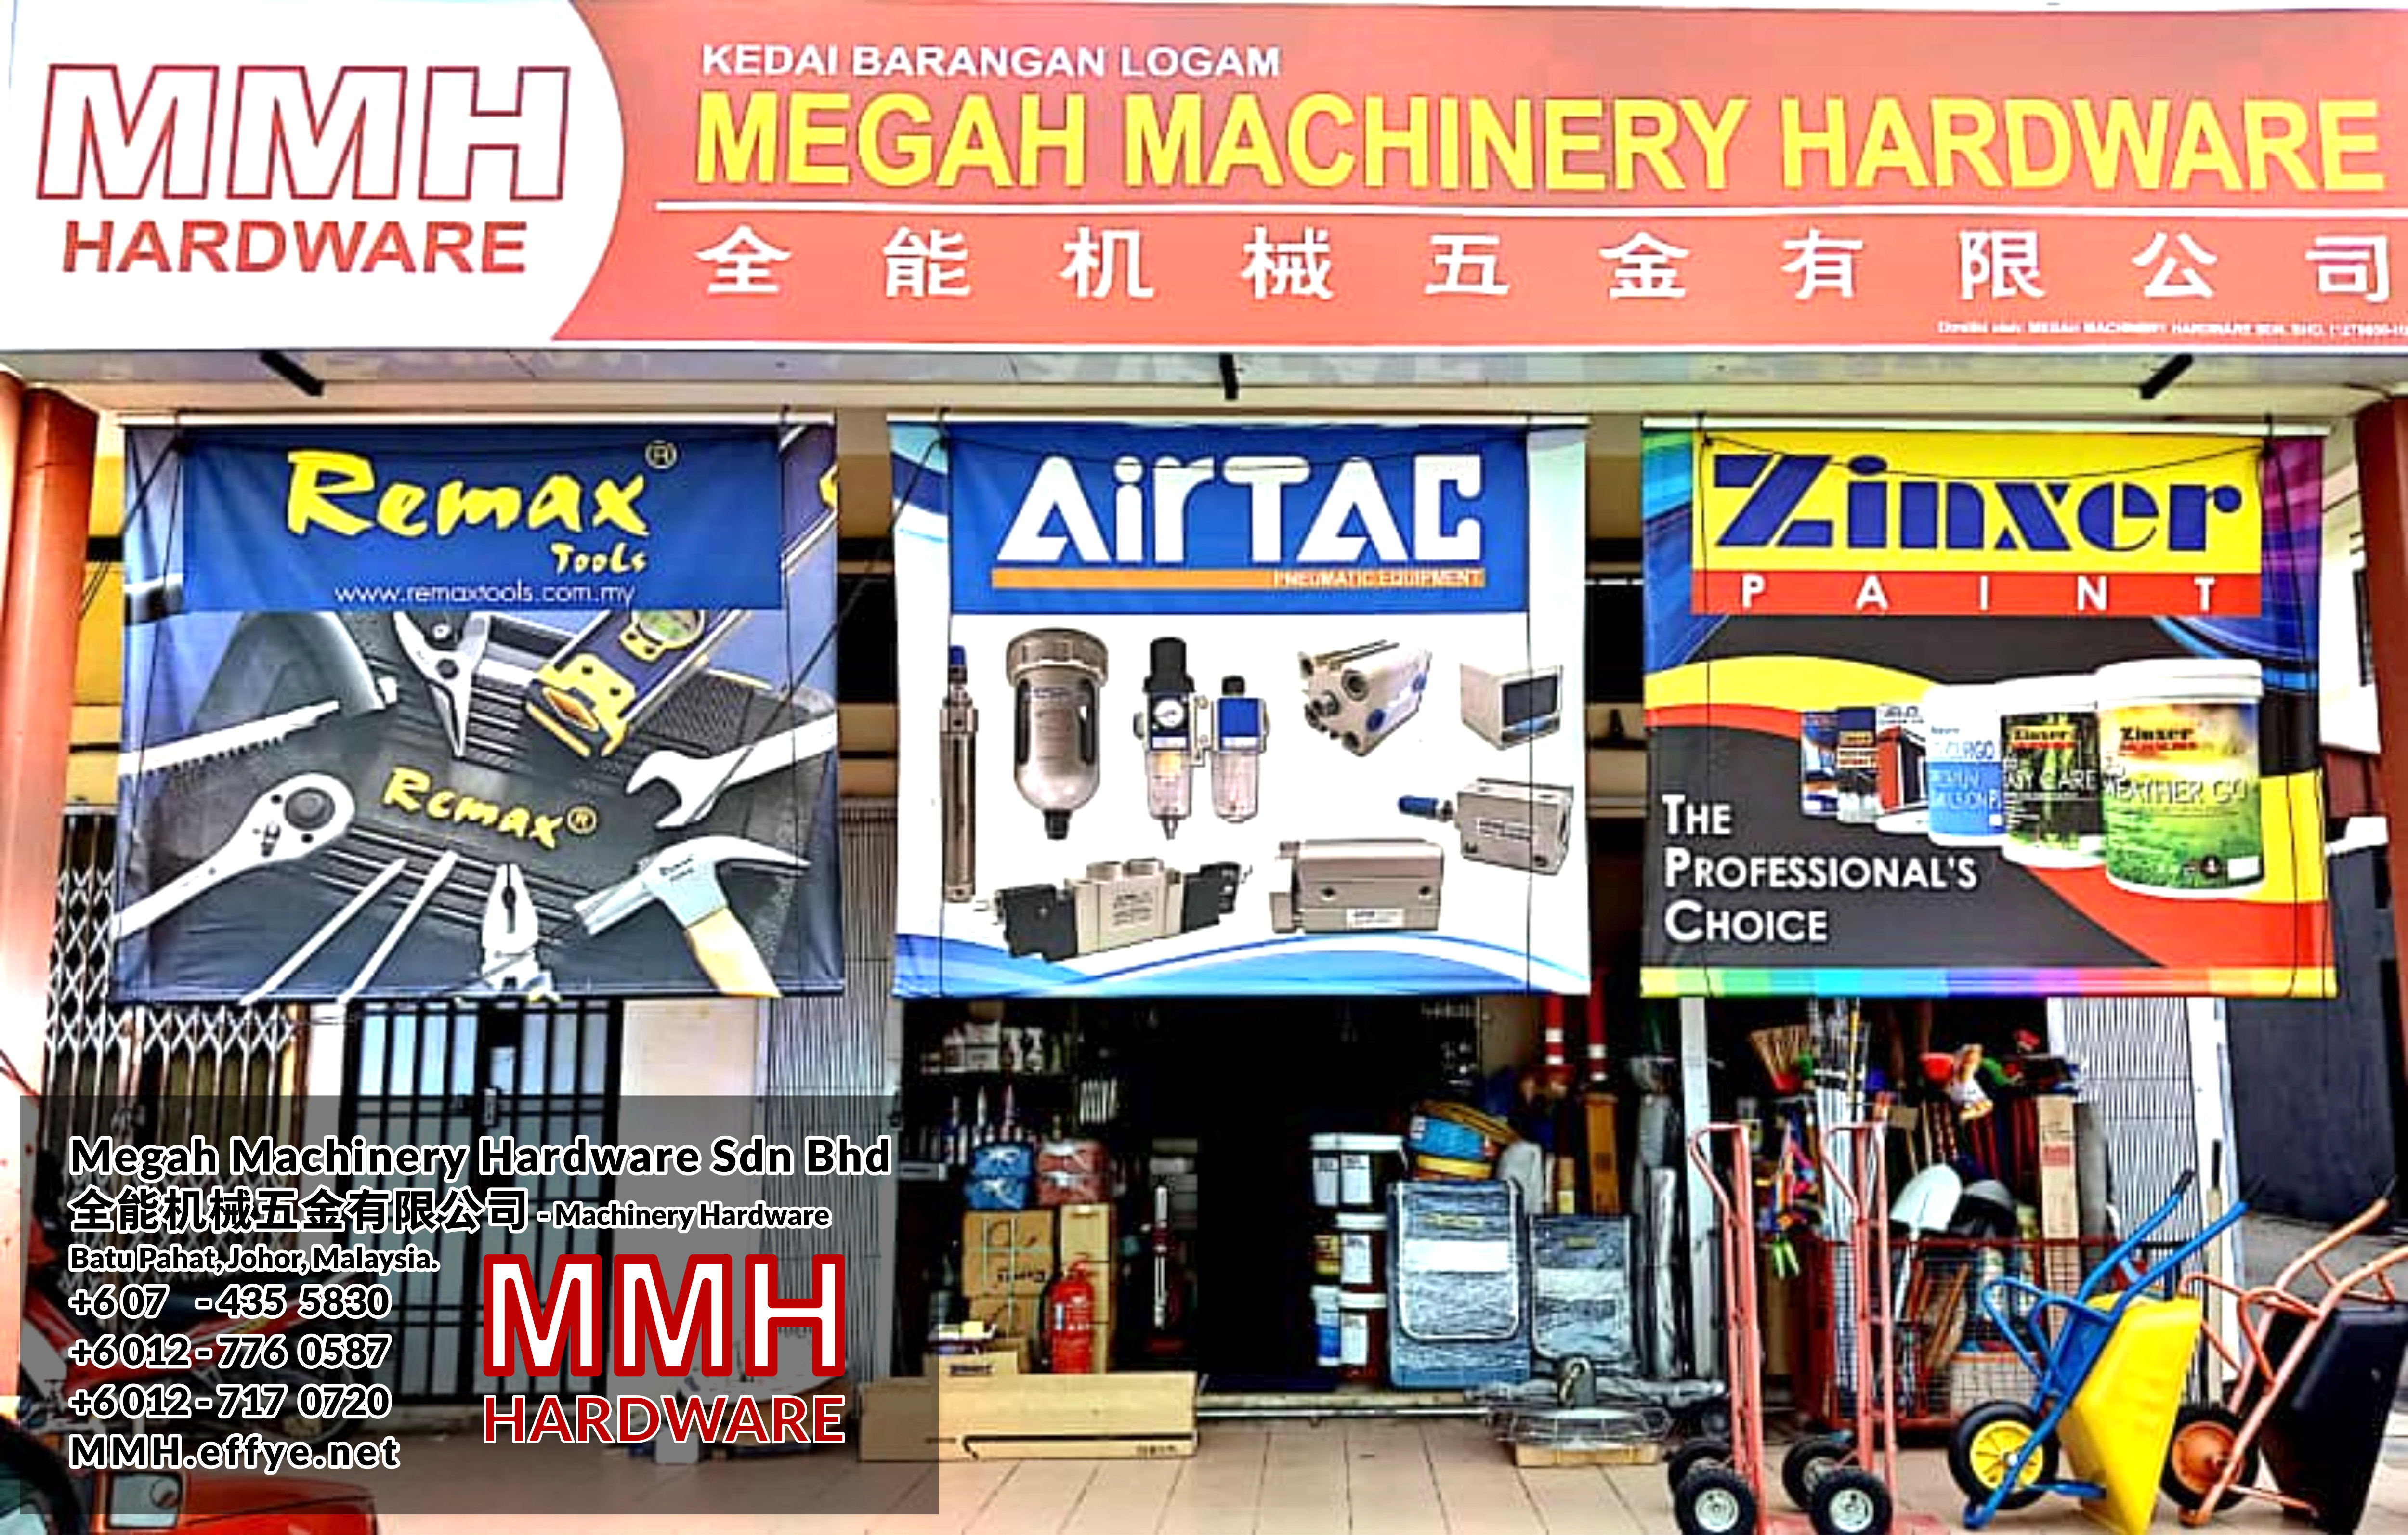 Malaysia Johor Batu Pahat Megah Machinery Hardware Sdn Bhd MMH Hardware Ang Ee Meng 洪维明 马来西亚 柔佛 峇株巴辖 全能机械五金有限公司 工业设备 液压机械 A02-01